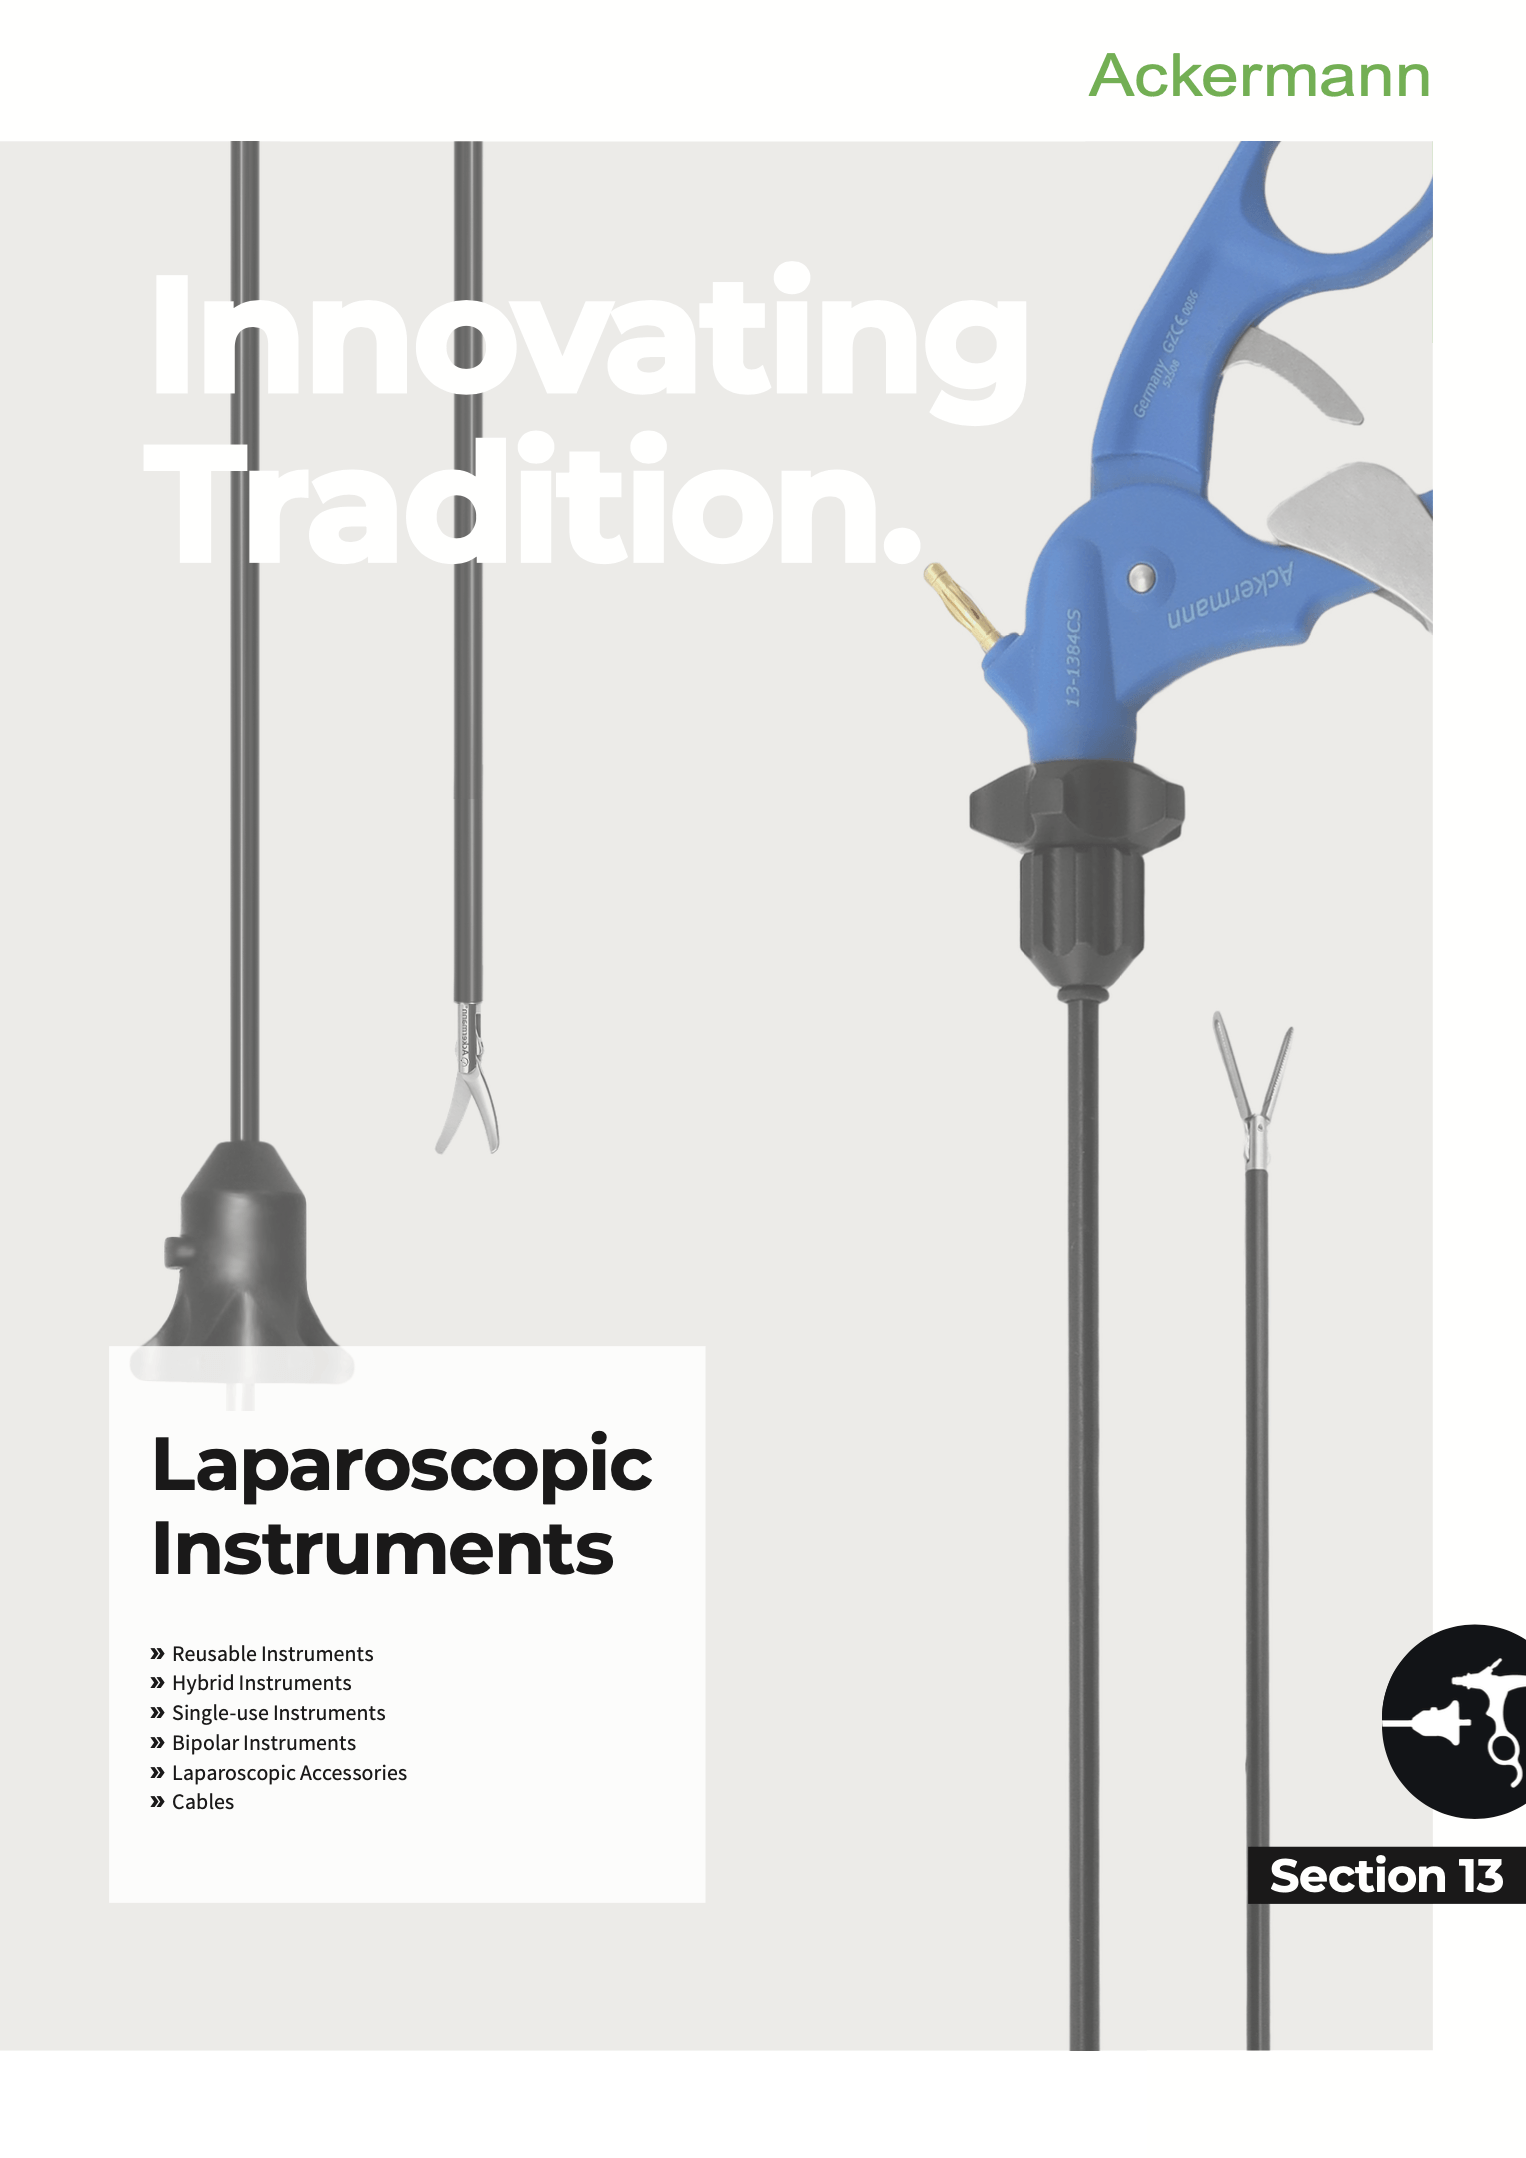 Locamed Ackermann laparoscopic intruments, UK distributor, full brochure pdf